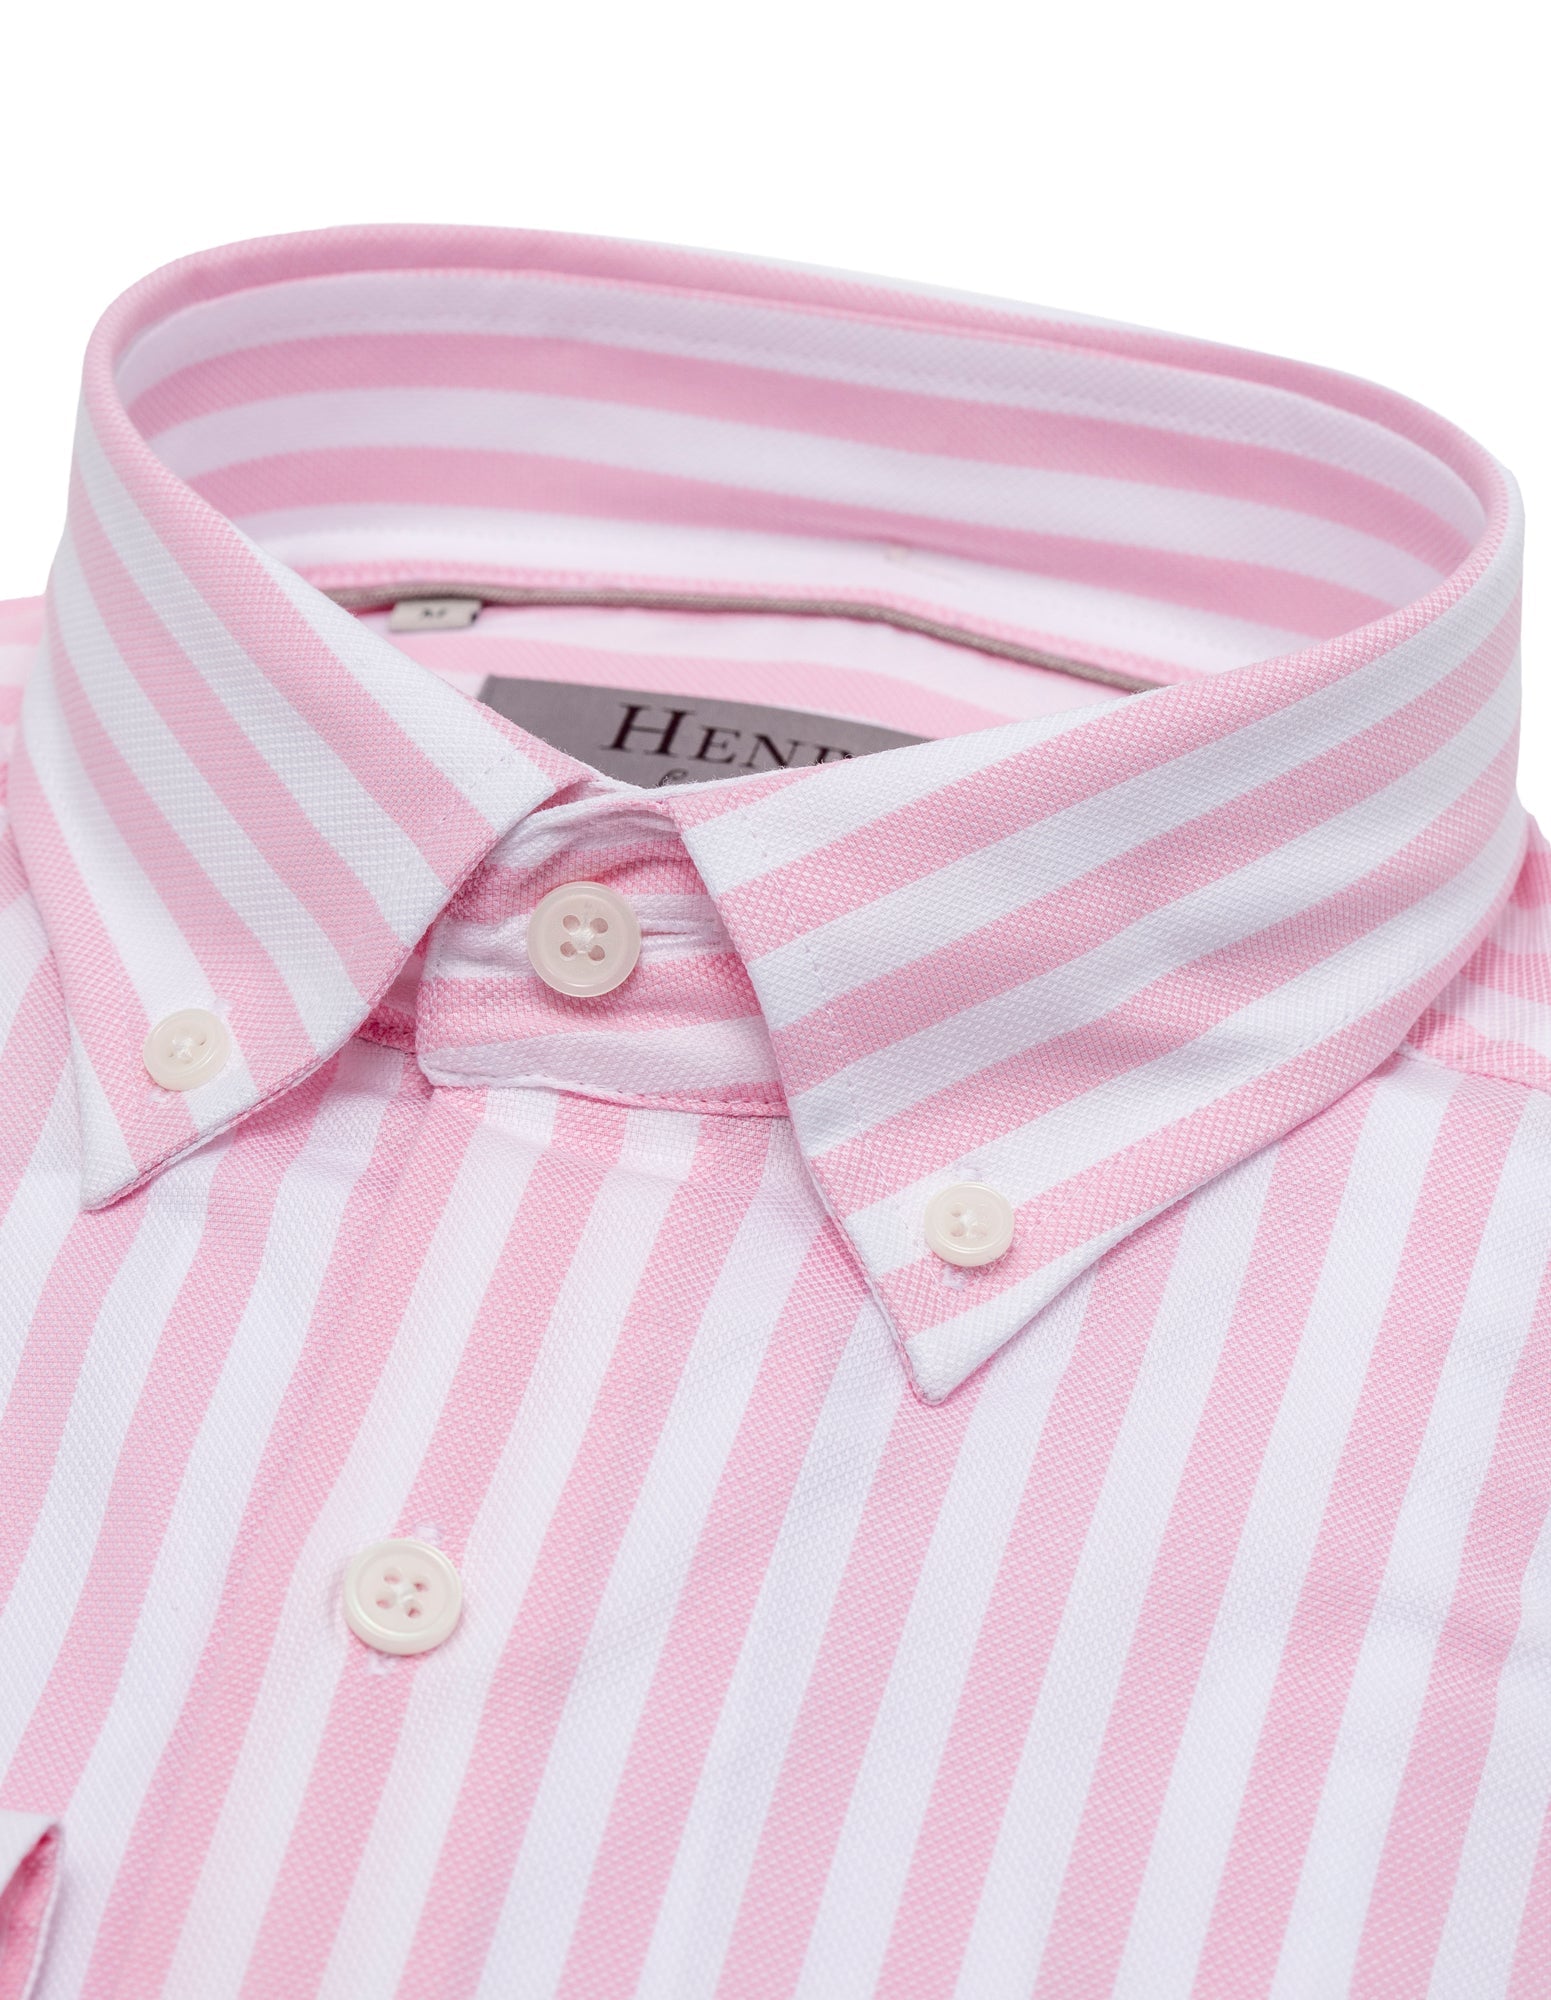 HENRY SARTIRIAL Bengal Stripe Shirt PINK/WHITE - Henry BucksShirts38AW230091 - PNKWHT - SM